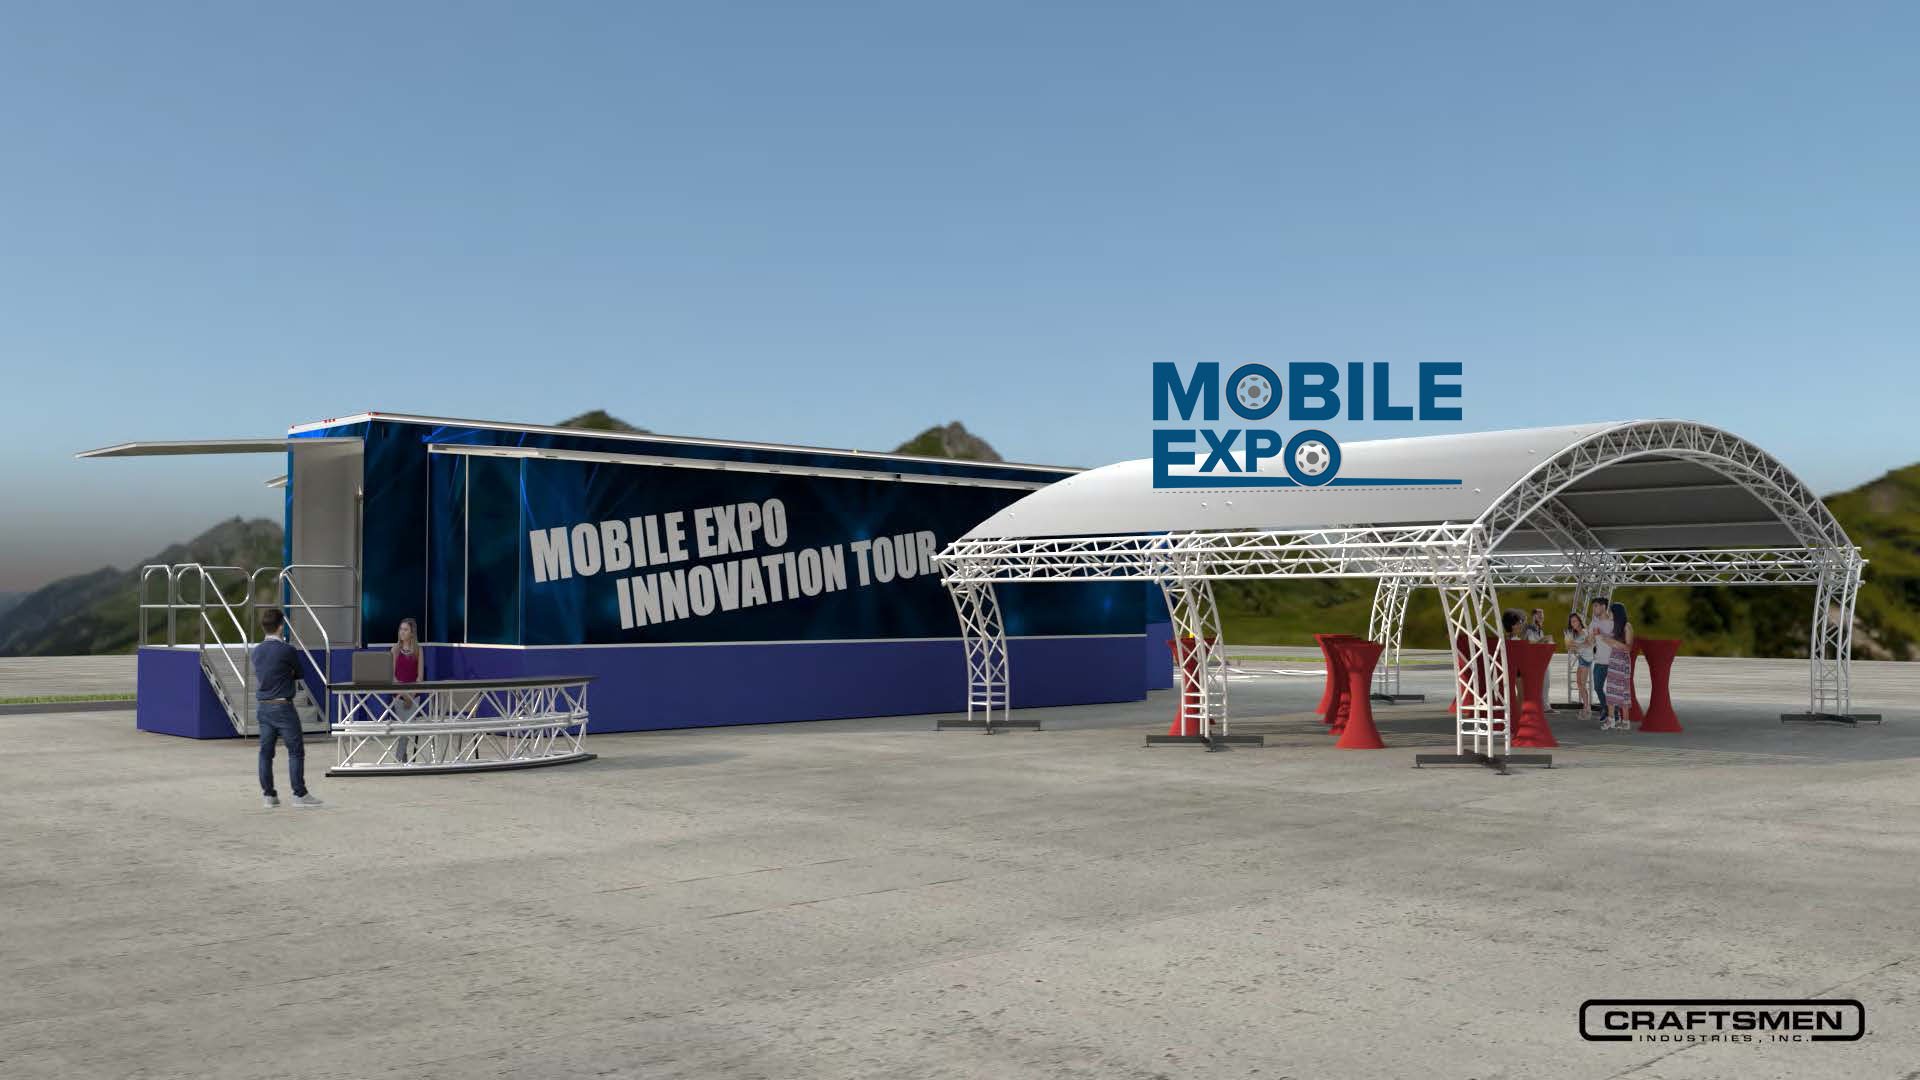 Mobile Expo Tour Trailer Exterior Footprint-w-logo2